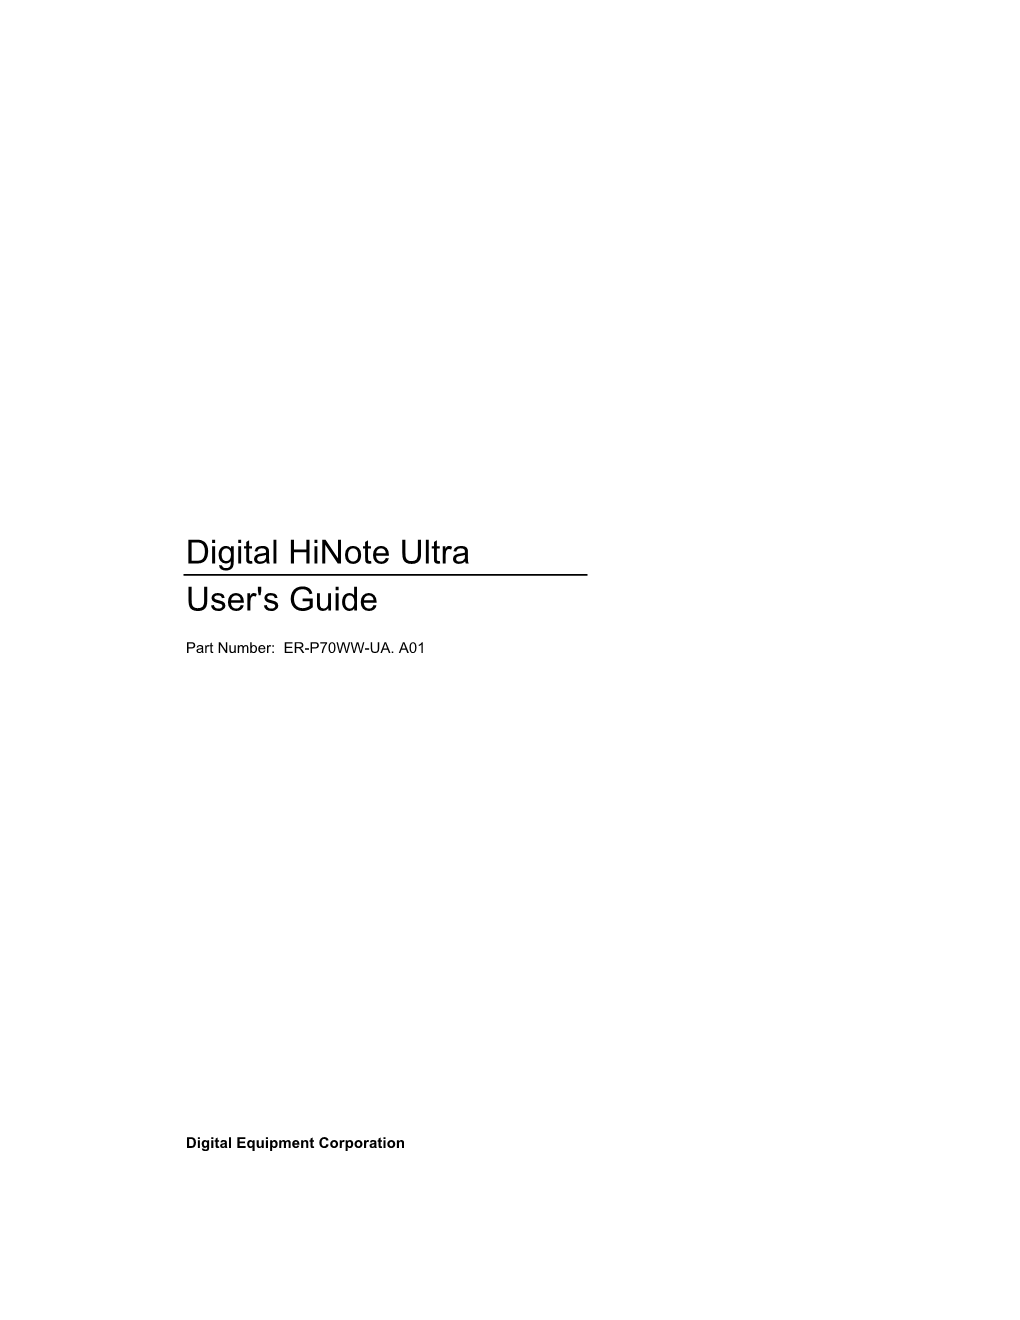 Digital Hinote Ultra User's Guide